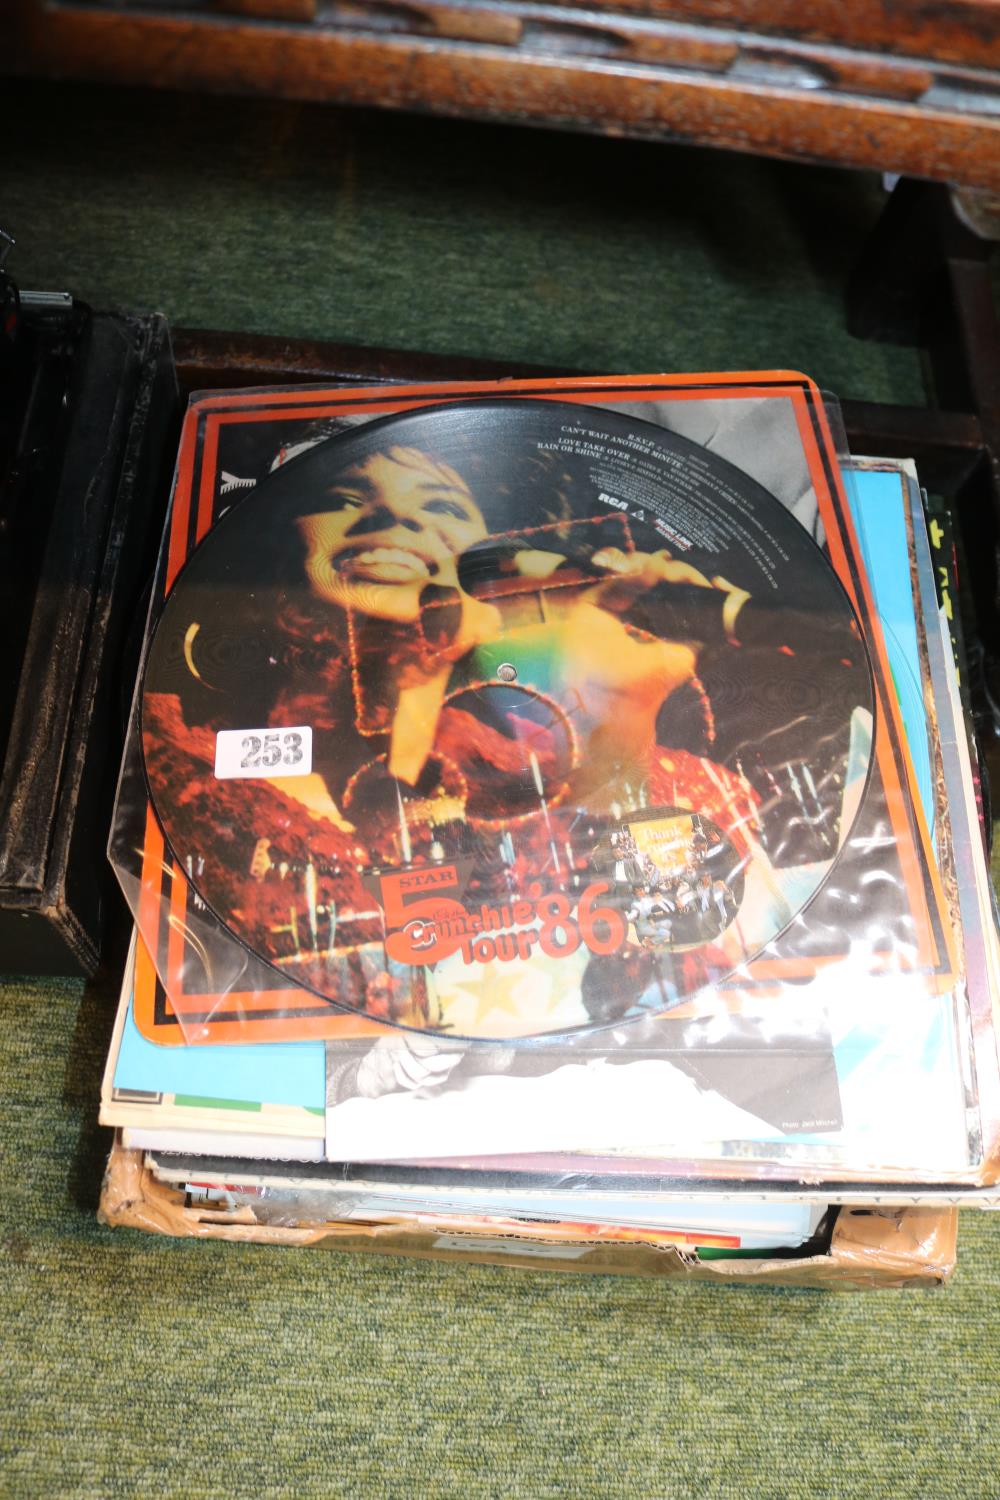 Collection of Vinyl records to include Sugar Daddy, Pet Shop Boys etc